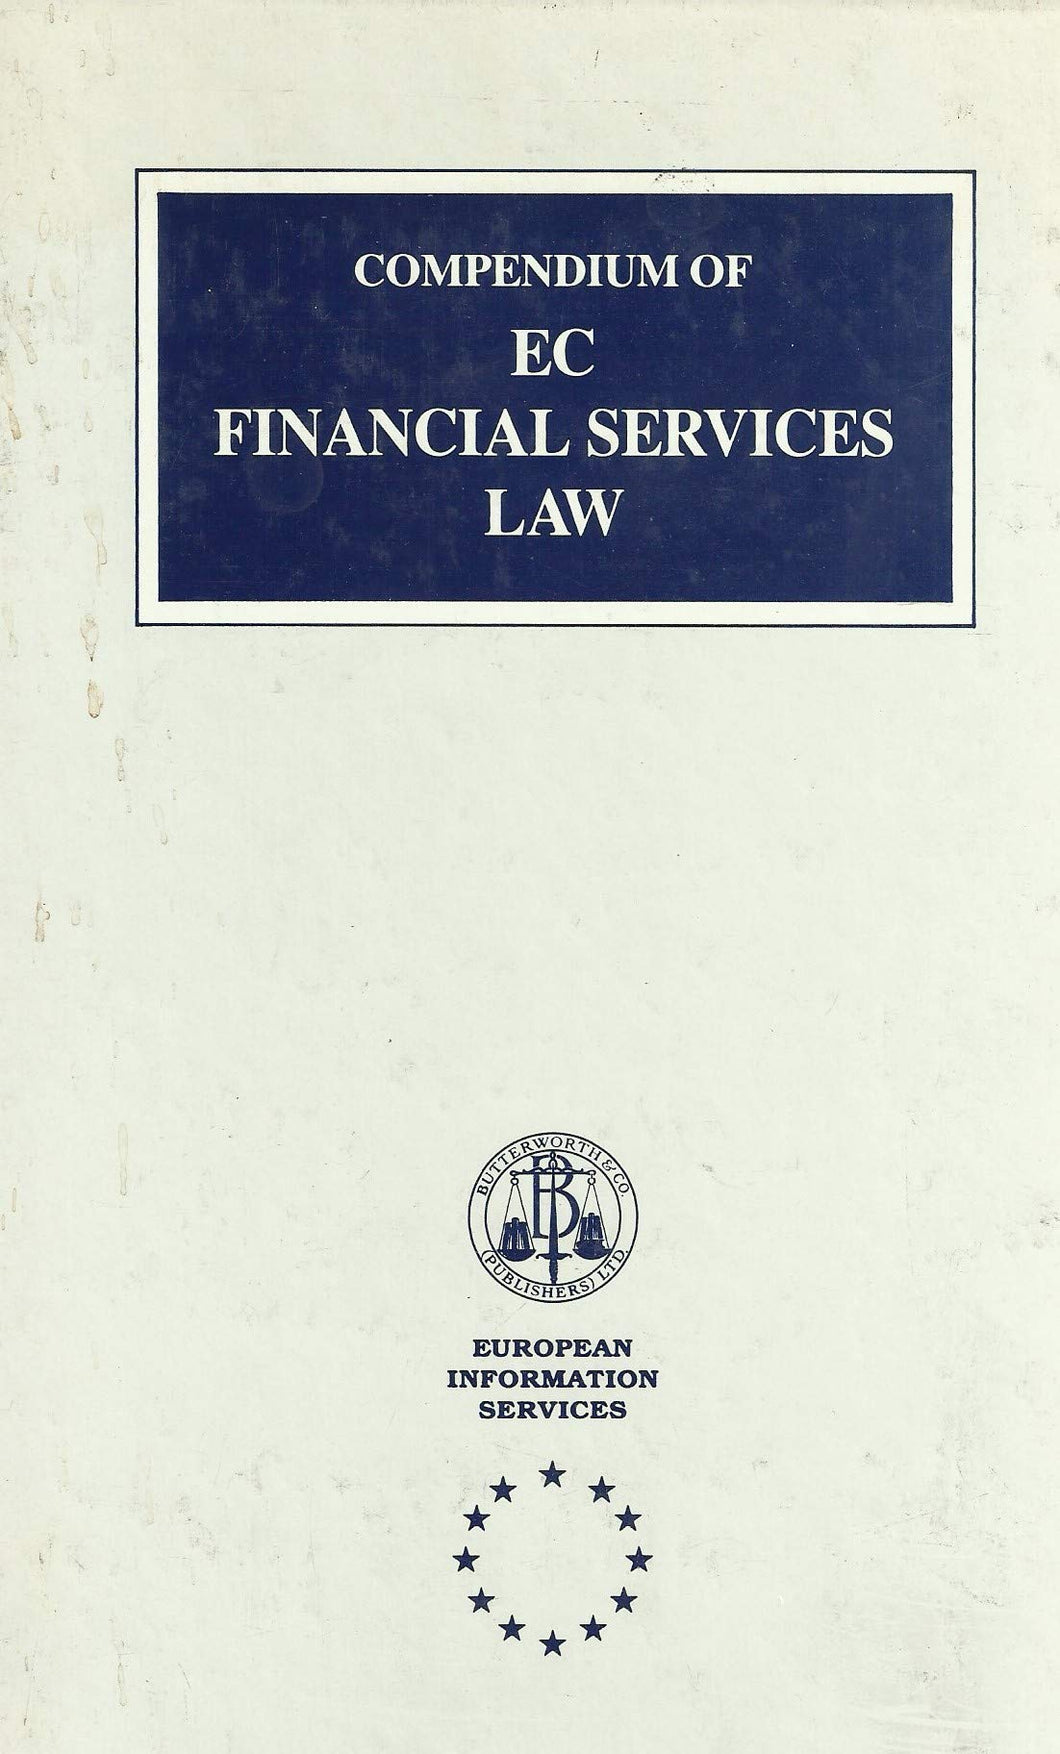 Compendium of European Community Financial Services Law (Butterworths European information services series)